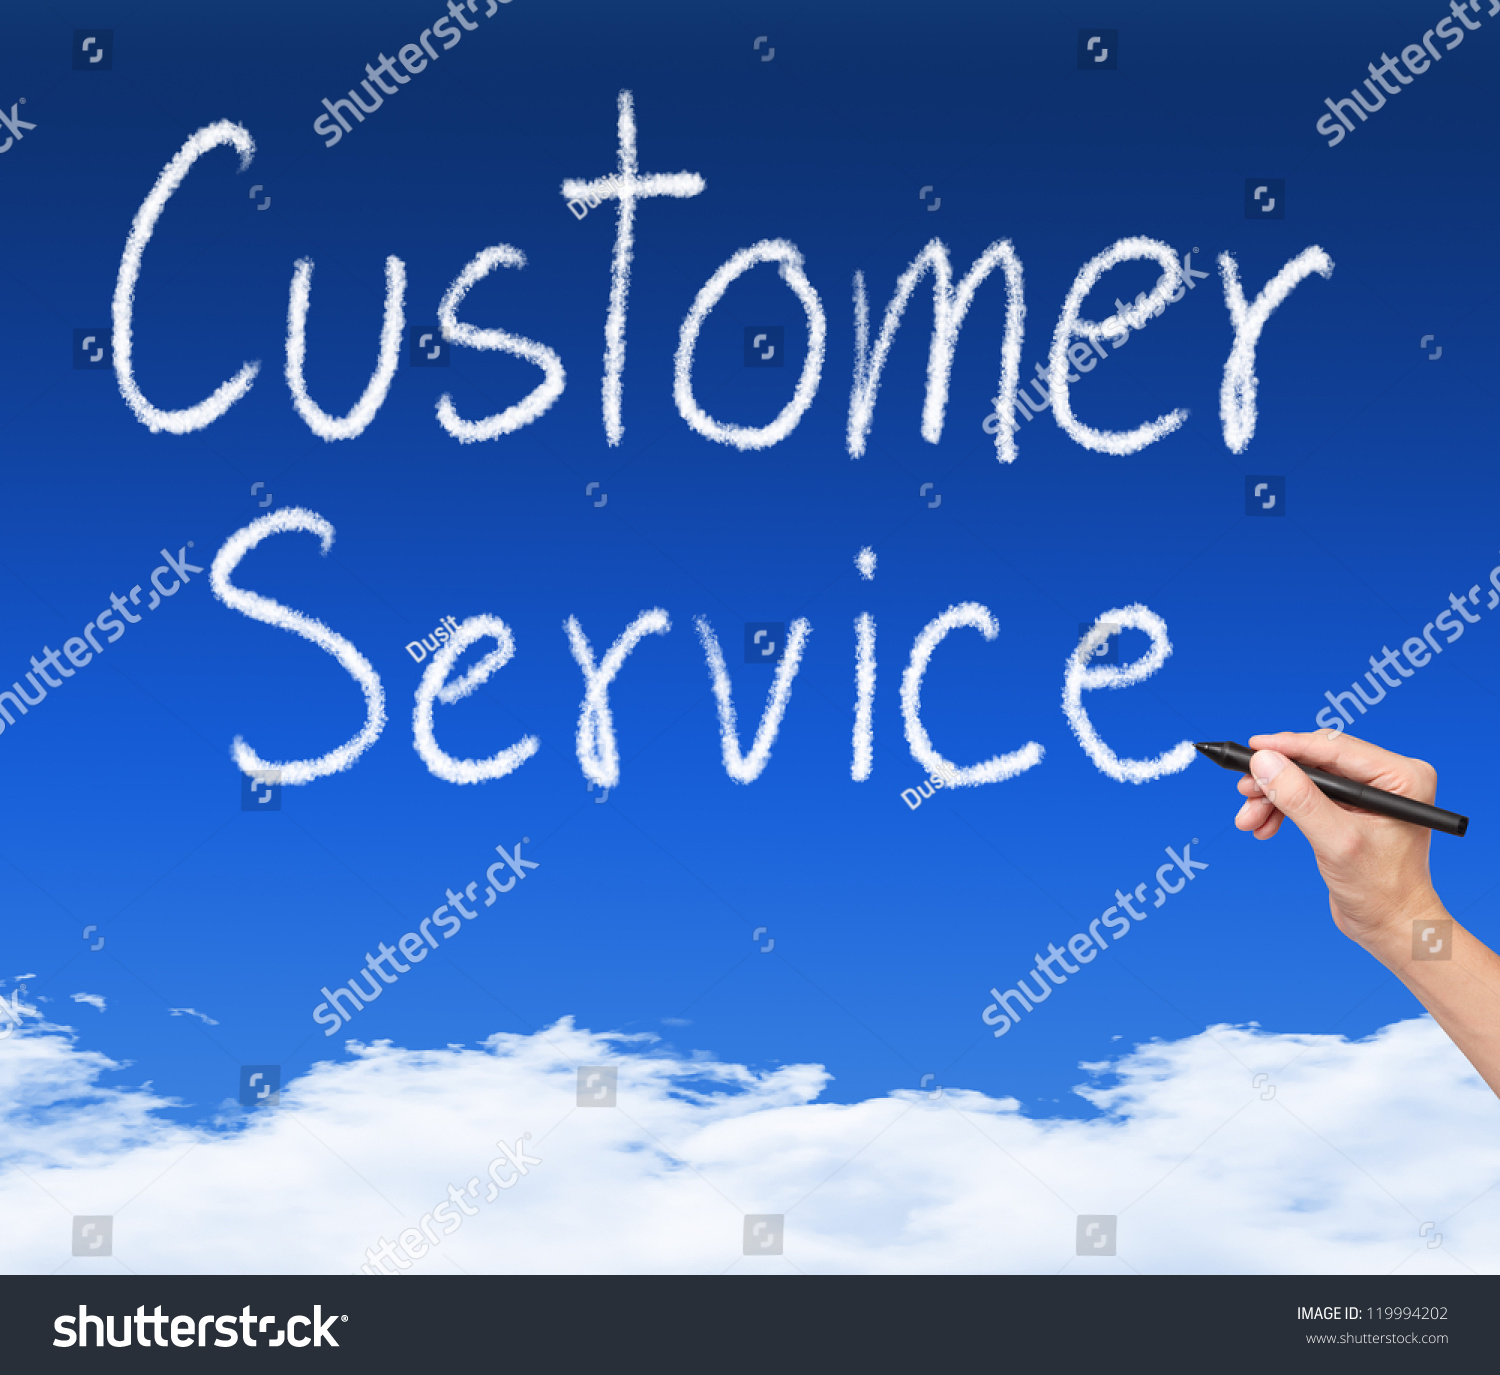 Essay customer service